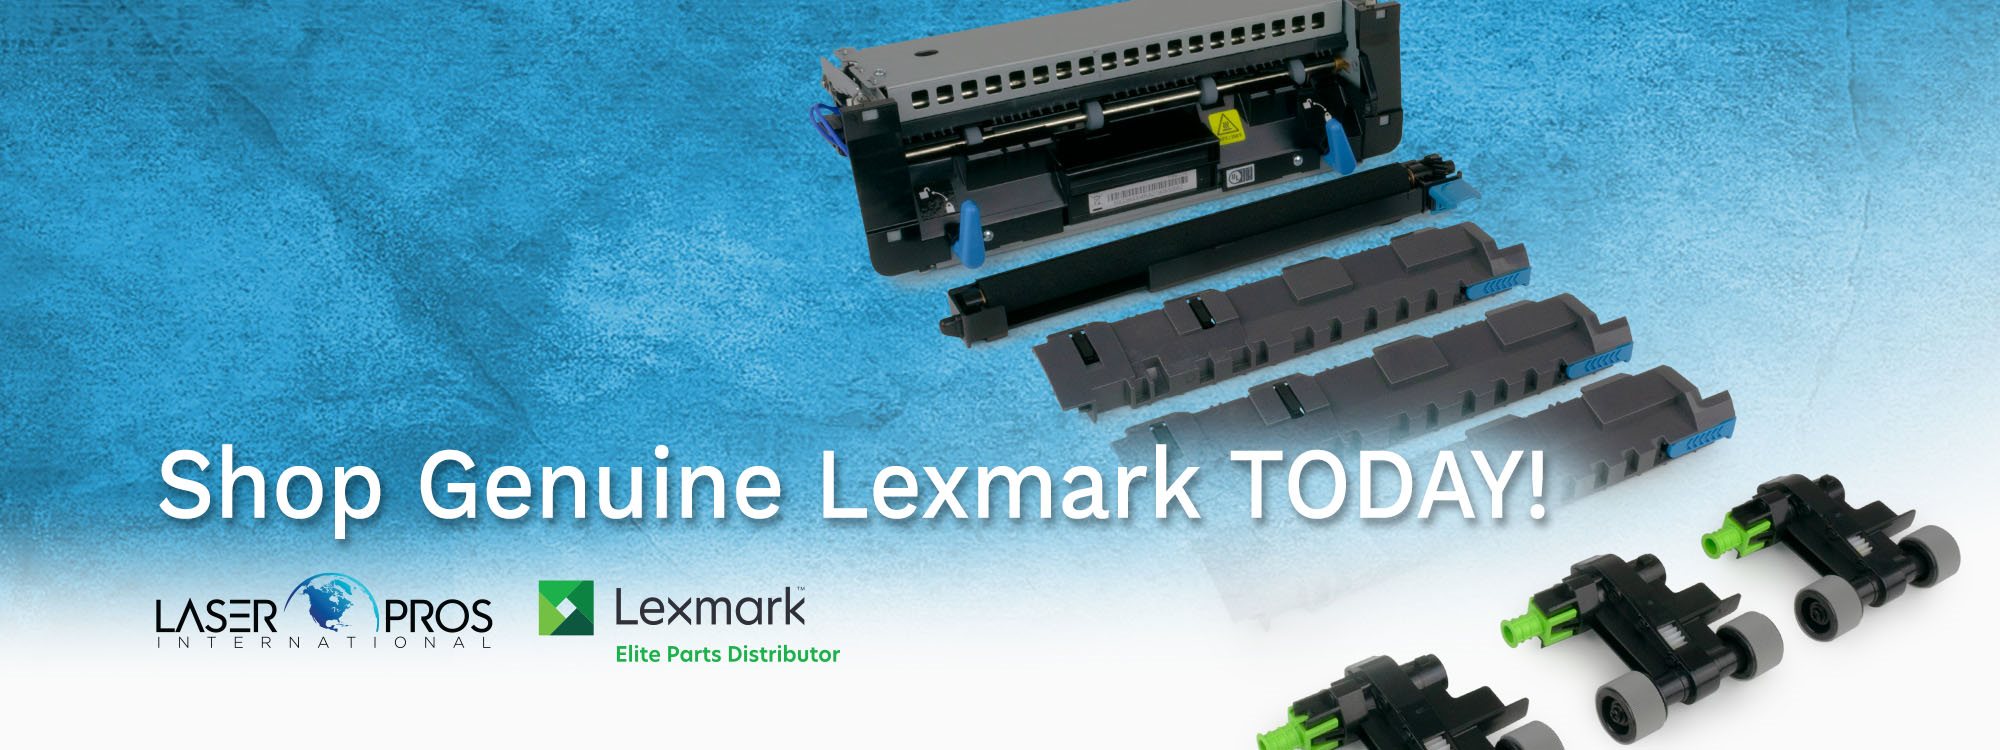 Laser Pros is your Lexmark Elite Parts Distributor SHOP NOW